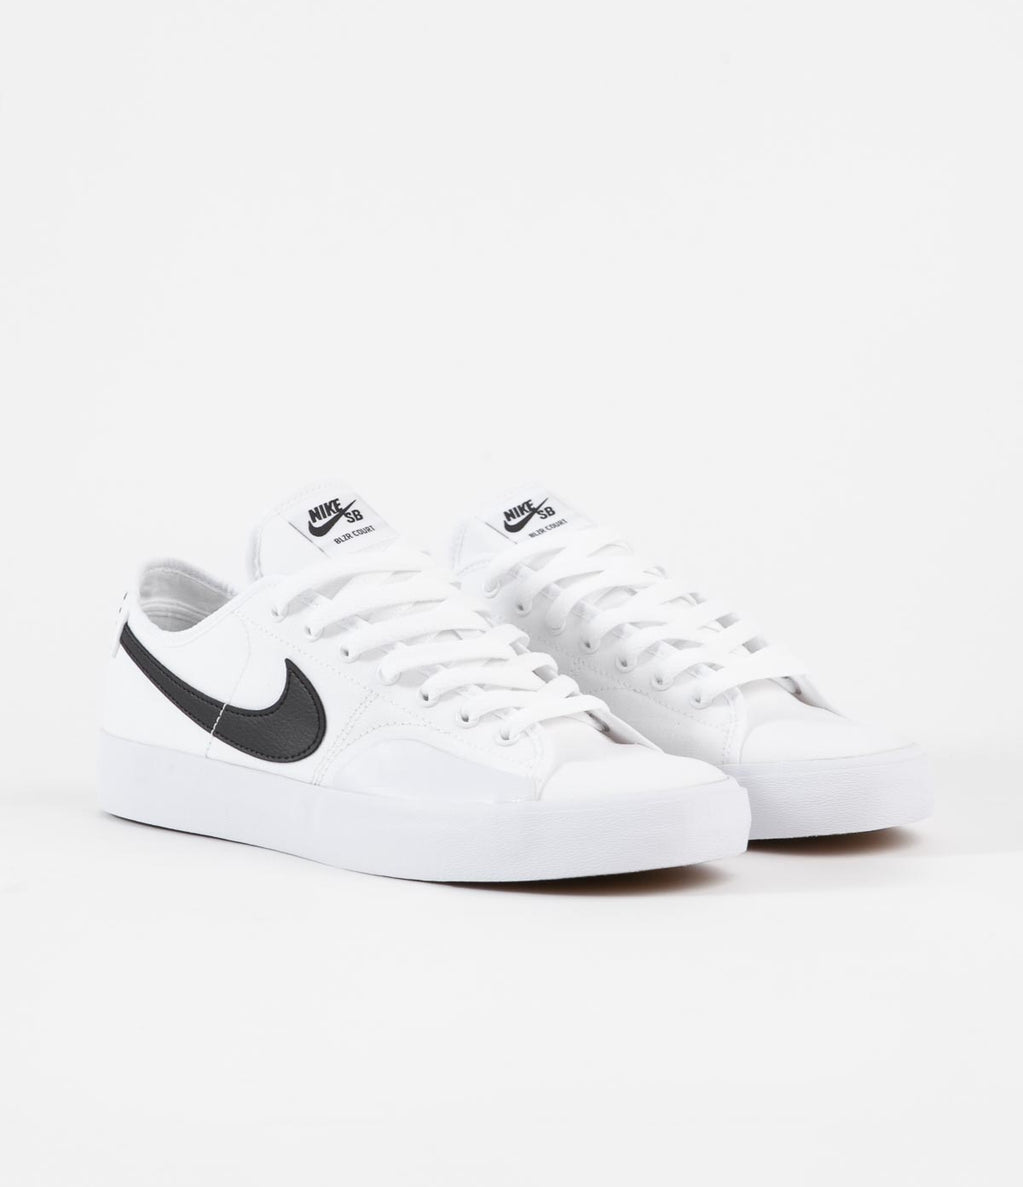 Nike SB BLZR Court Shoes - White / Black - White - Black | Flatspot